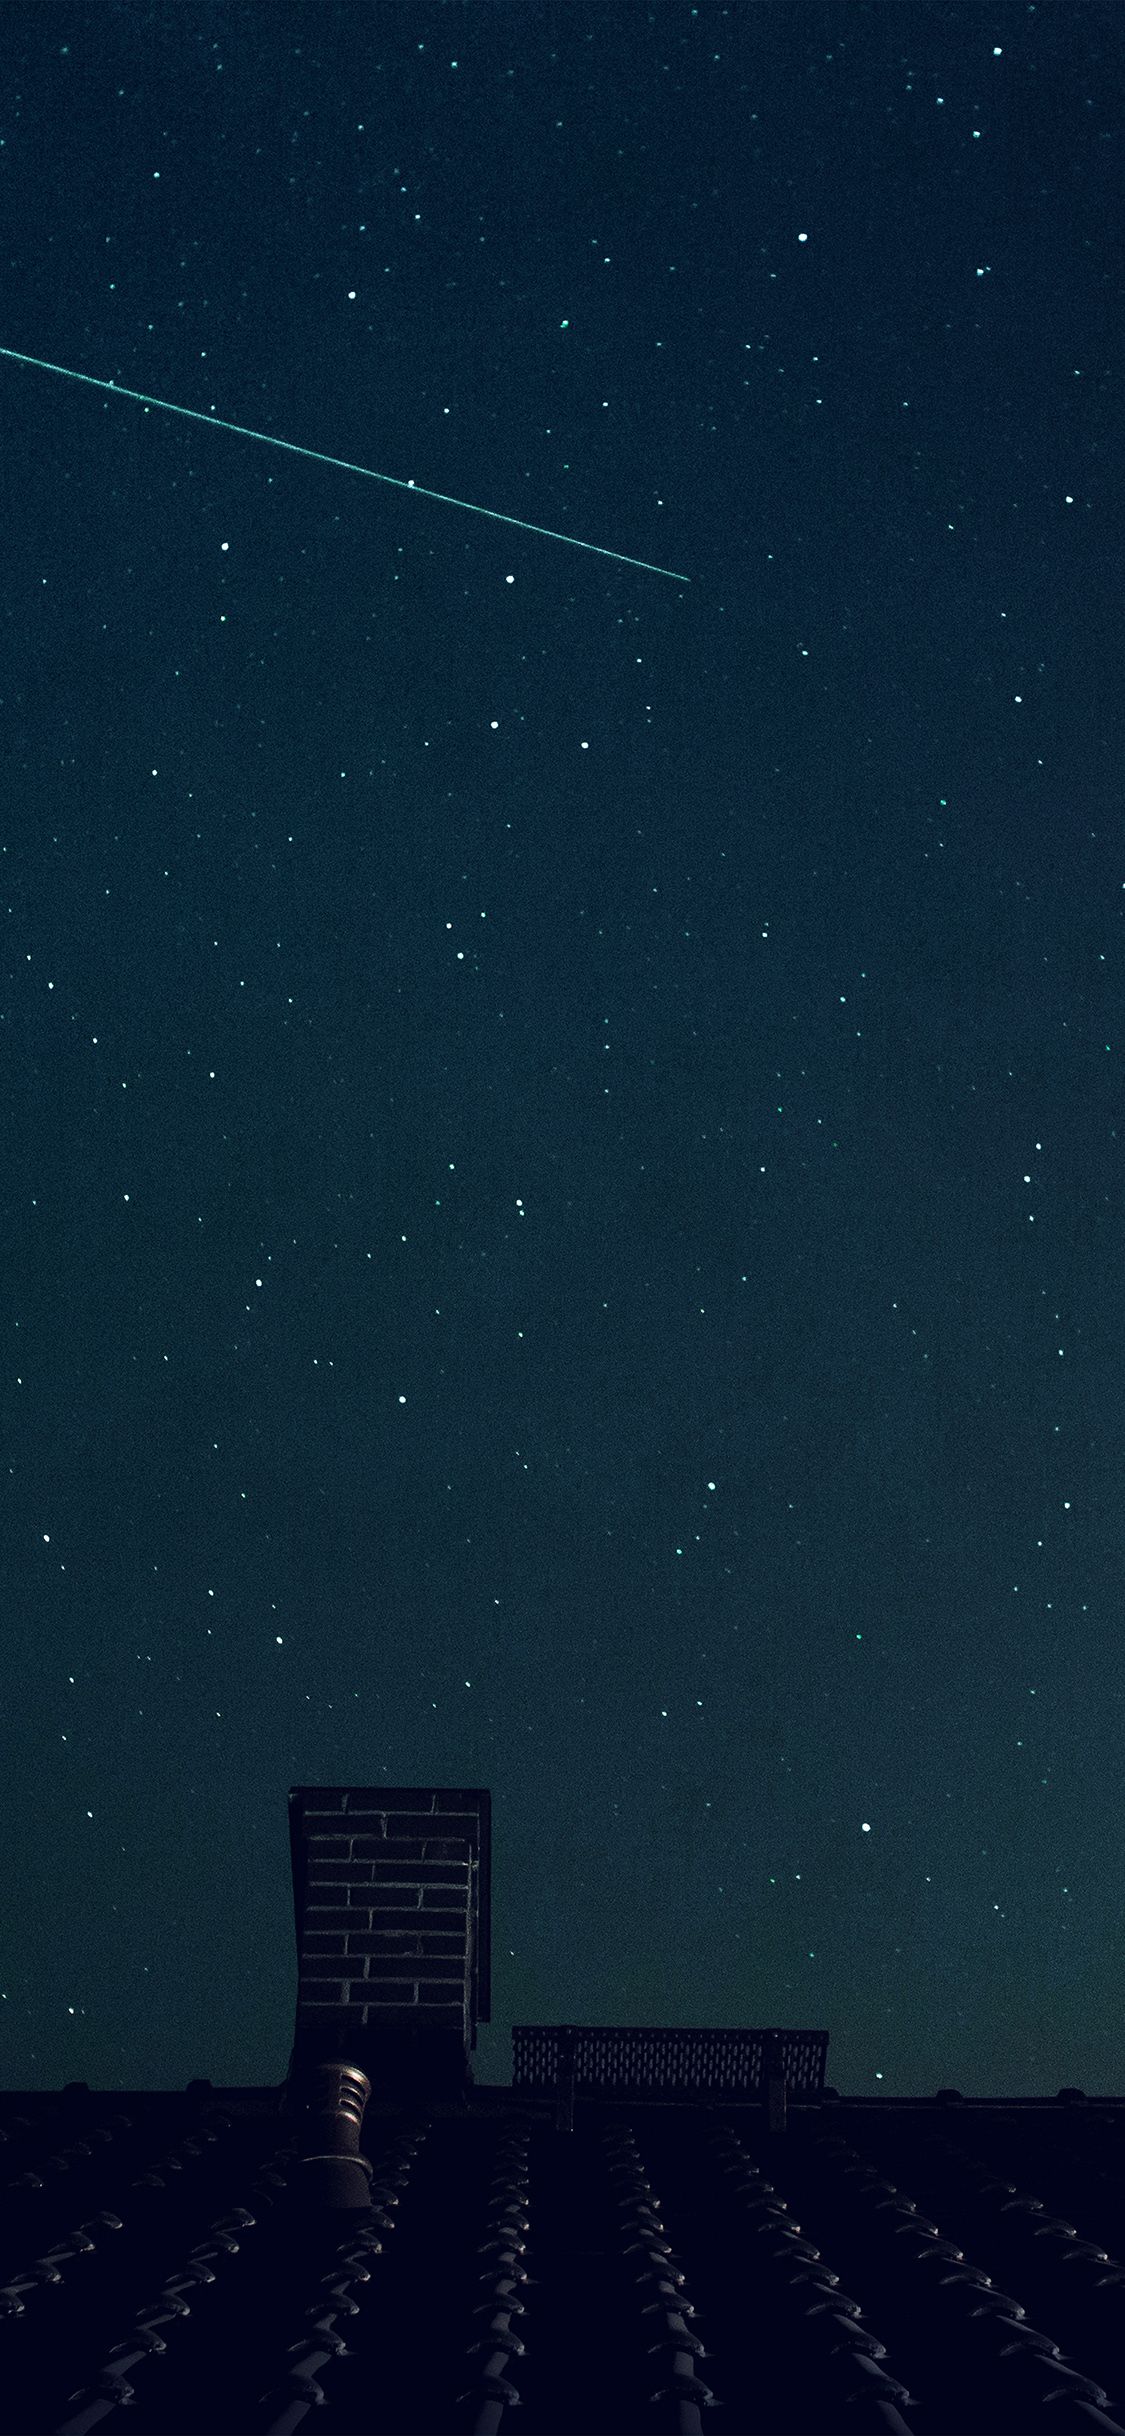 iPhone X wallpaper. star night sky